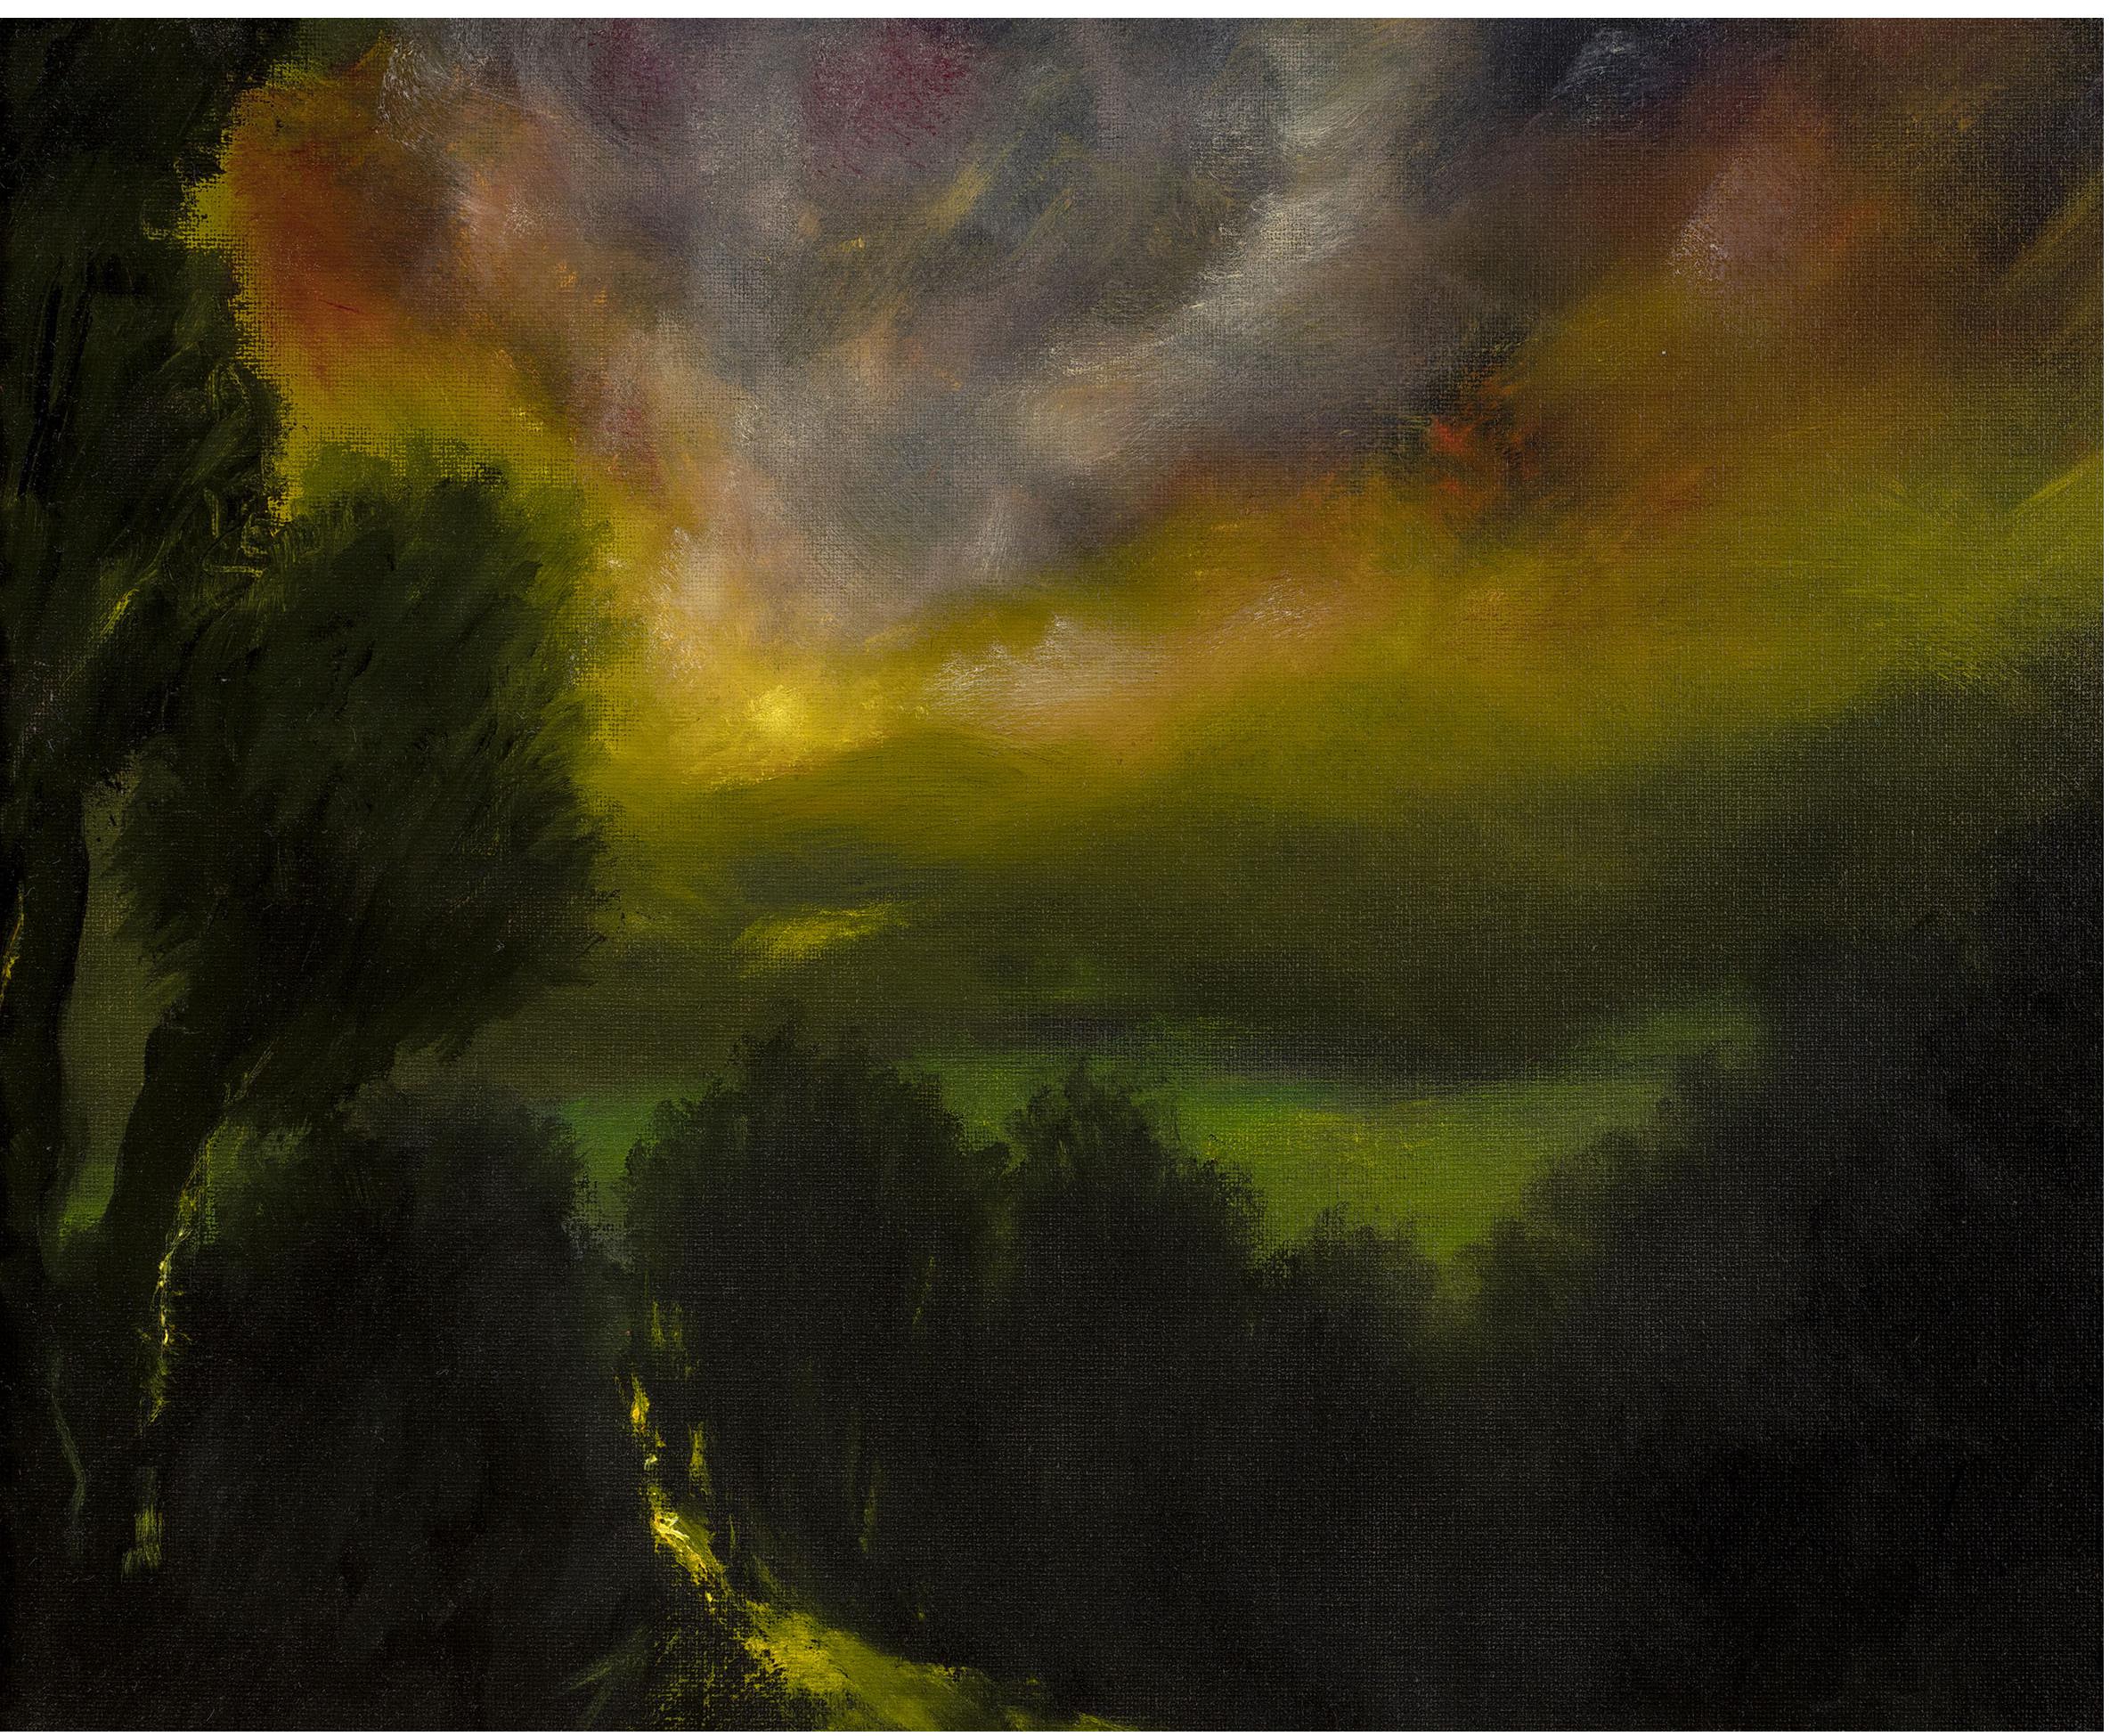 Matthew Bateson - "The Dark Forest 2", oil on canvas board, 40 x 50 cm